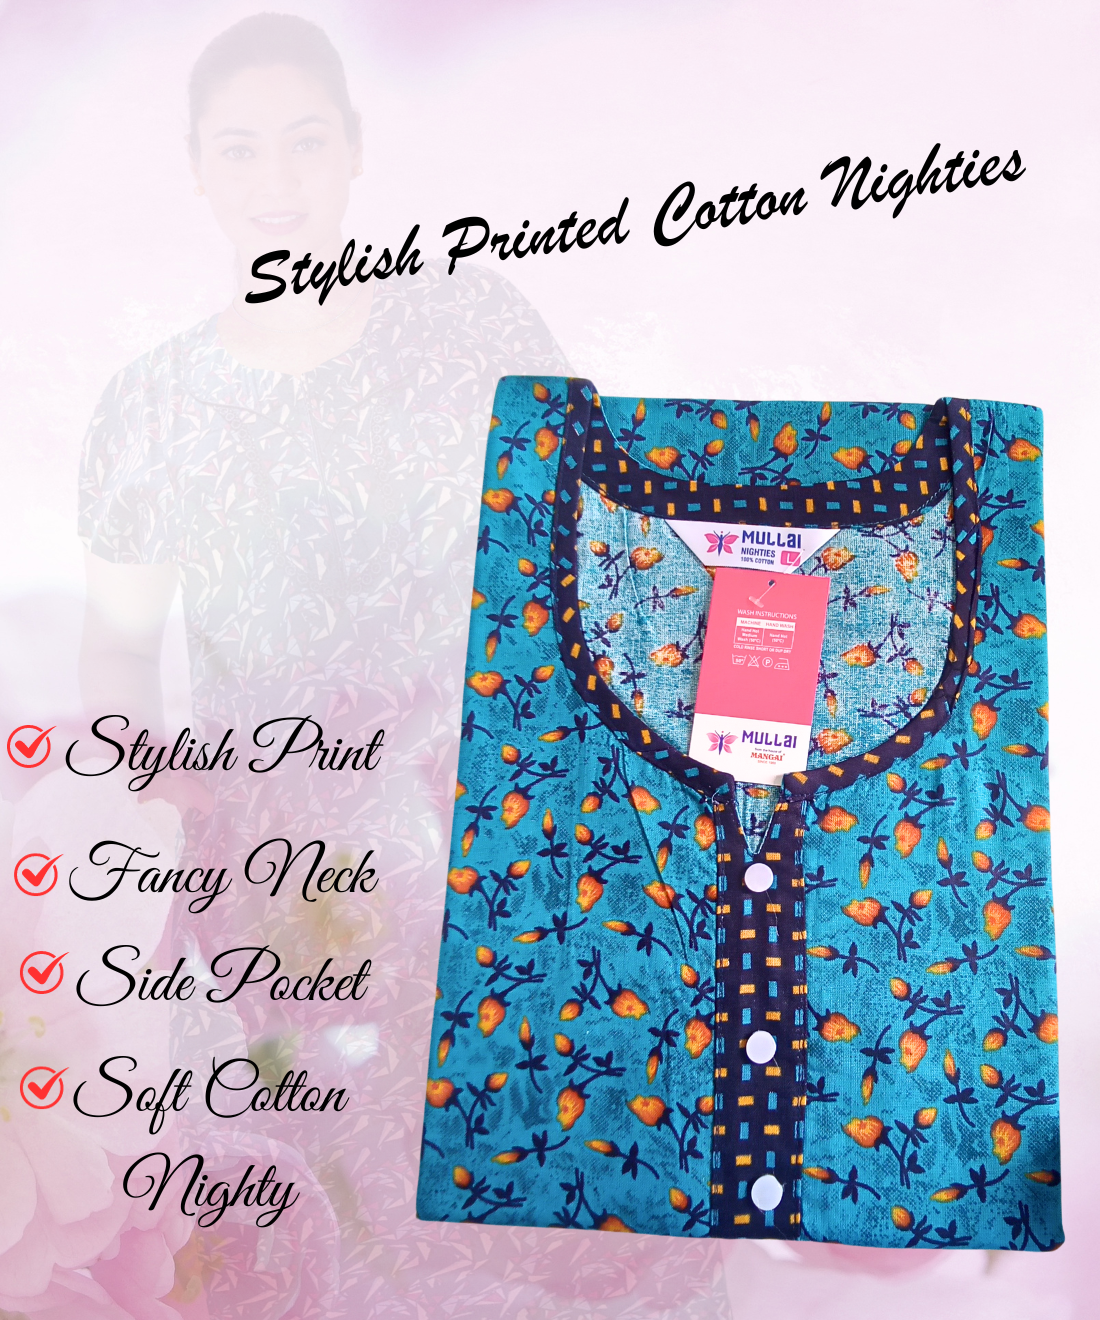 MANGAI Premium Regular Fit Cotton PrintedNighties - All Over Printed Stylish Nightwear for Stylish Women | Beautiful Nighties for Stylish Women's